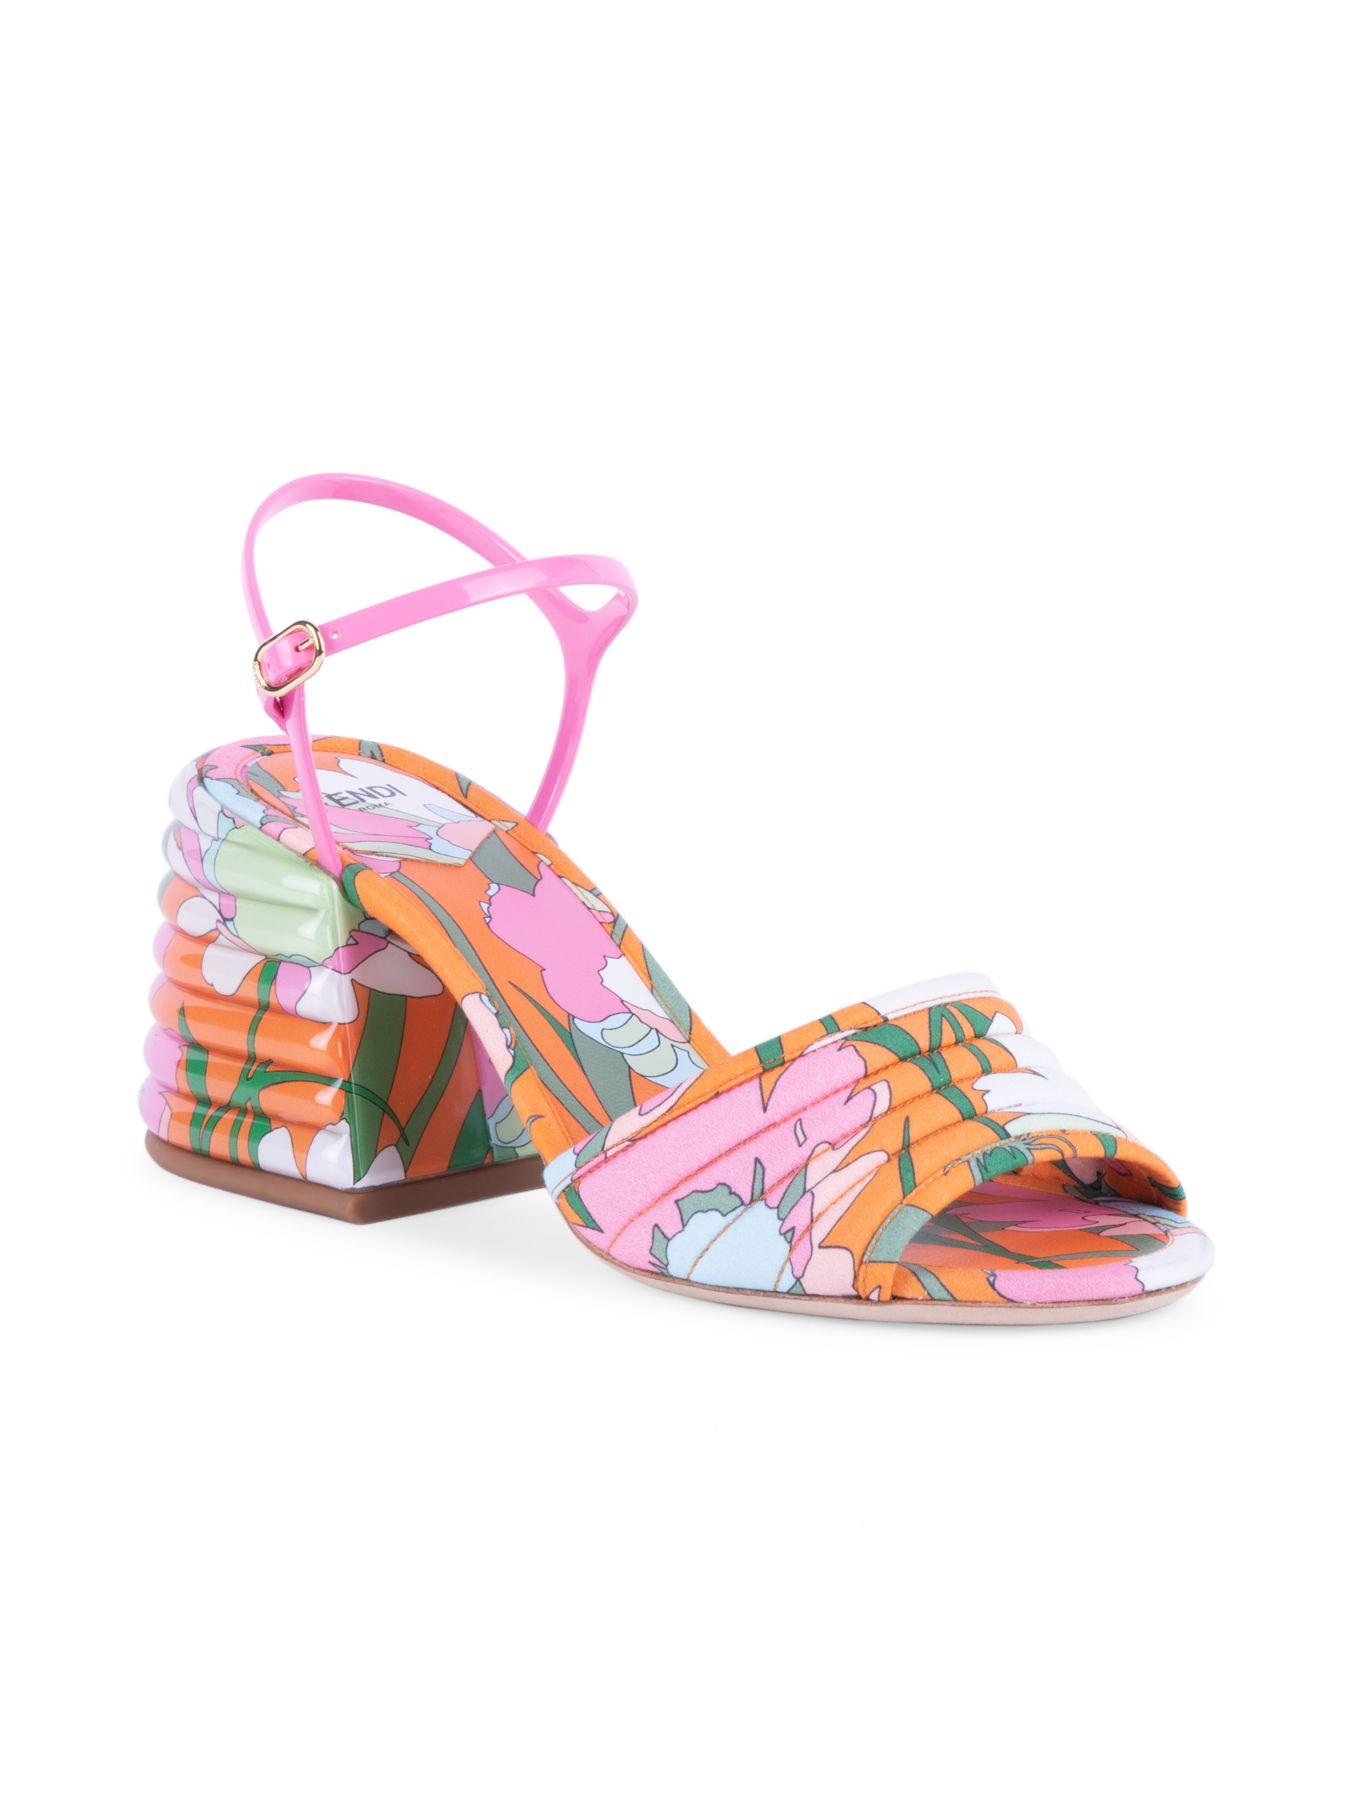 Fendi Cotton Floral-print Block-heel Sandals in Pink - Lyst